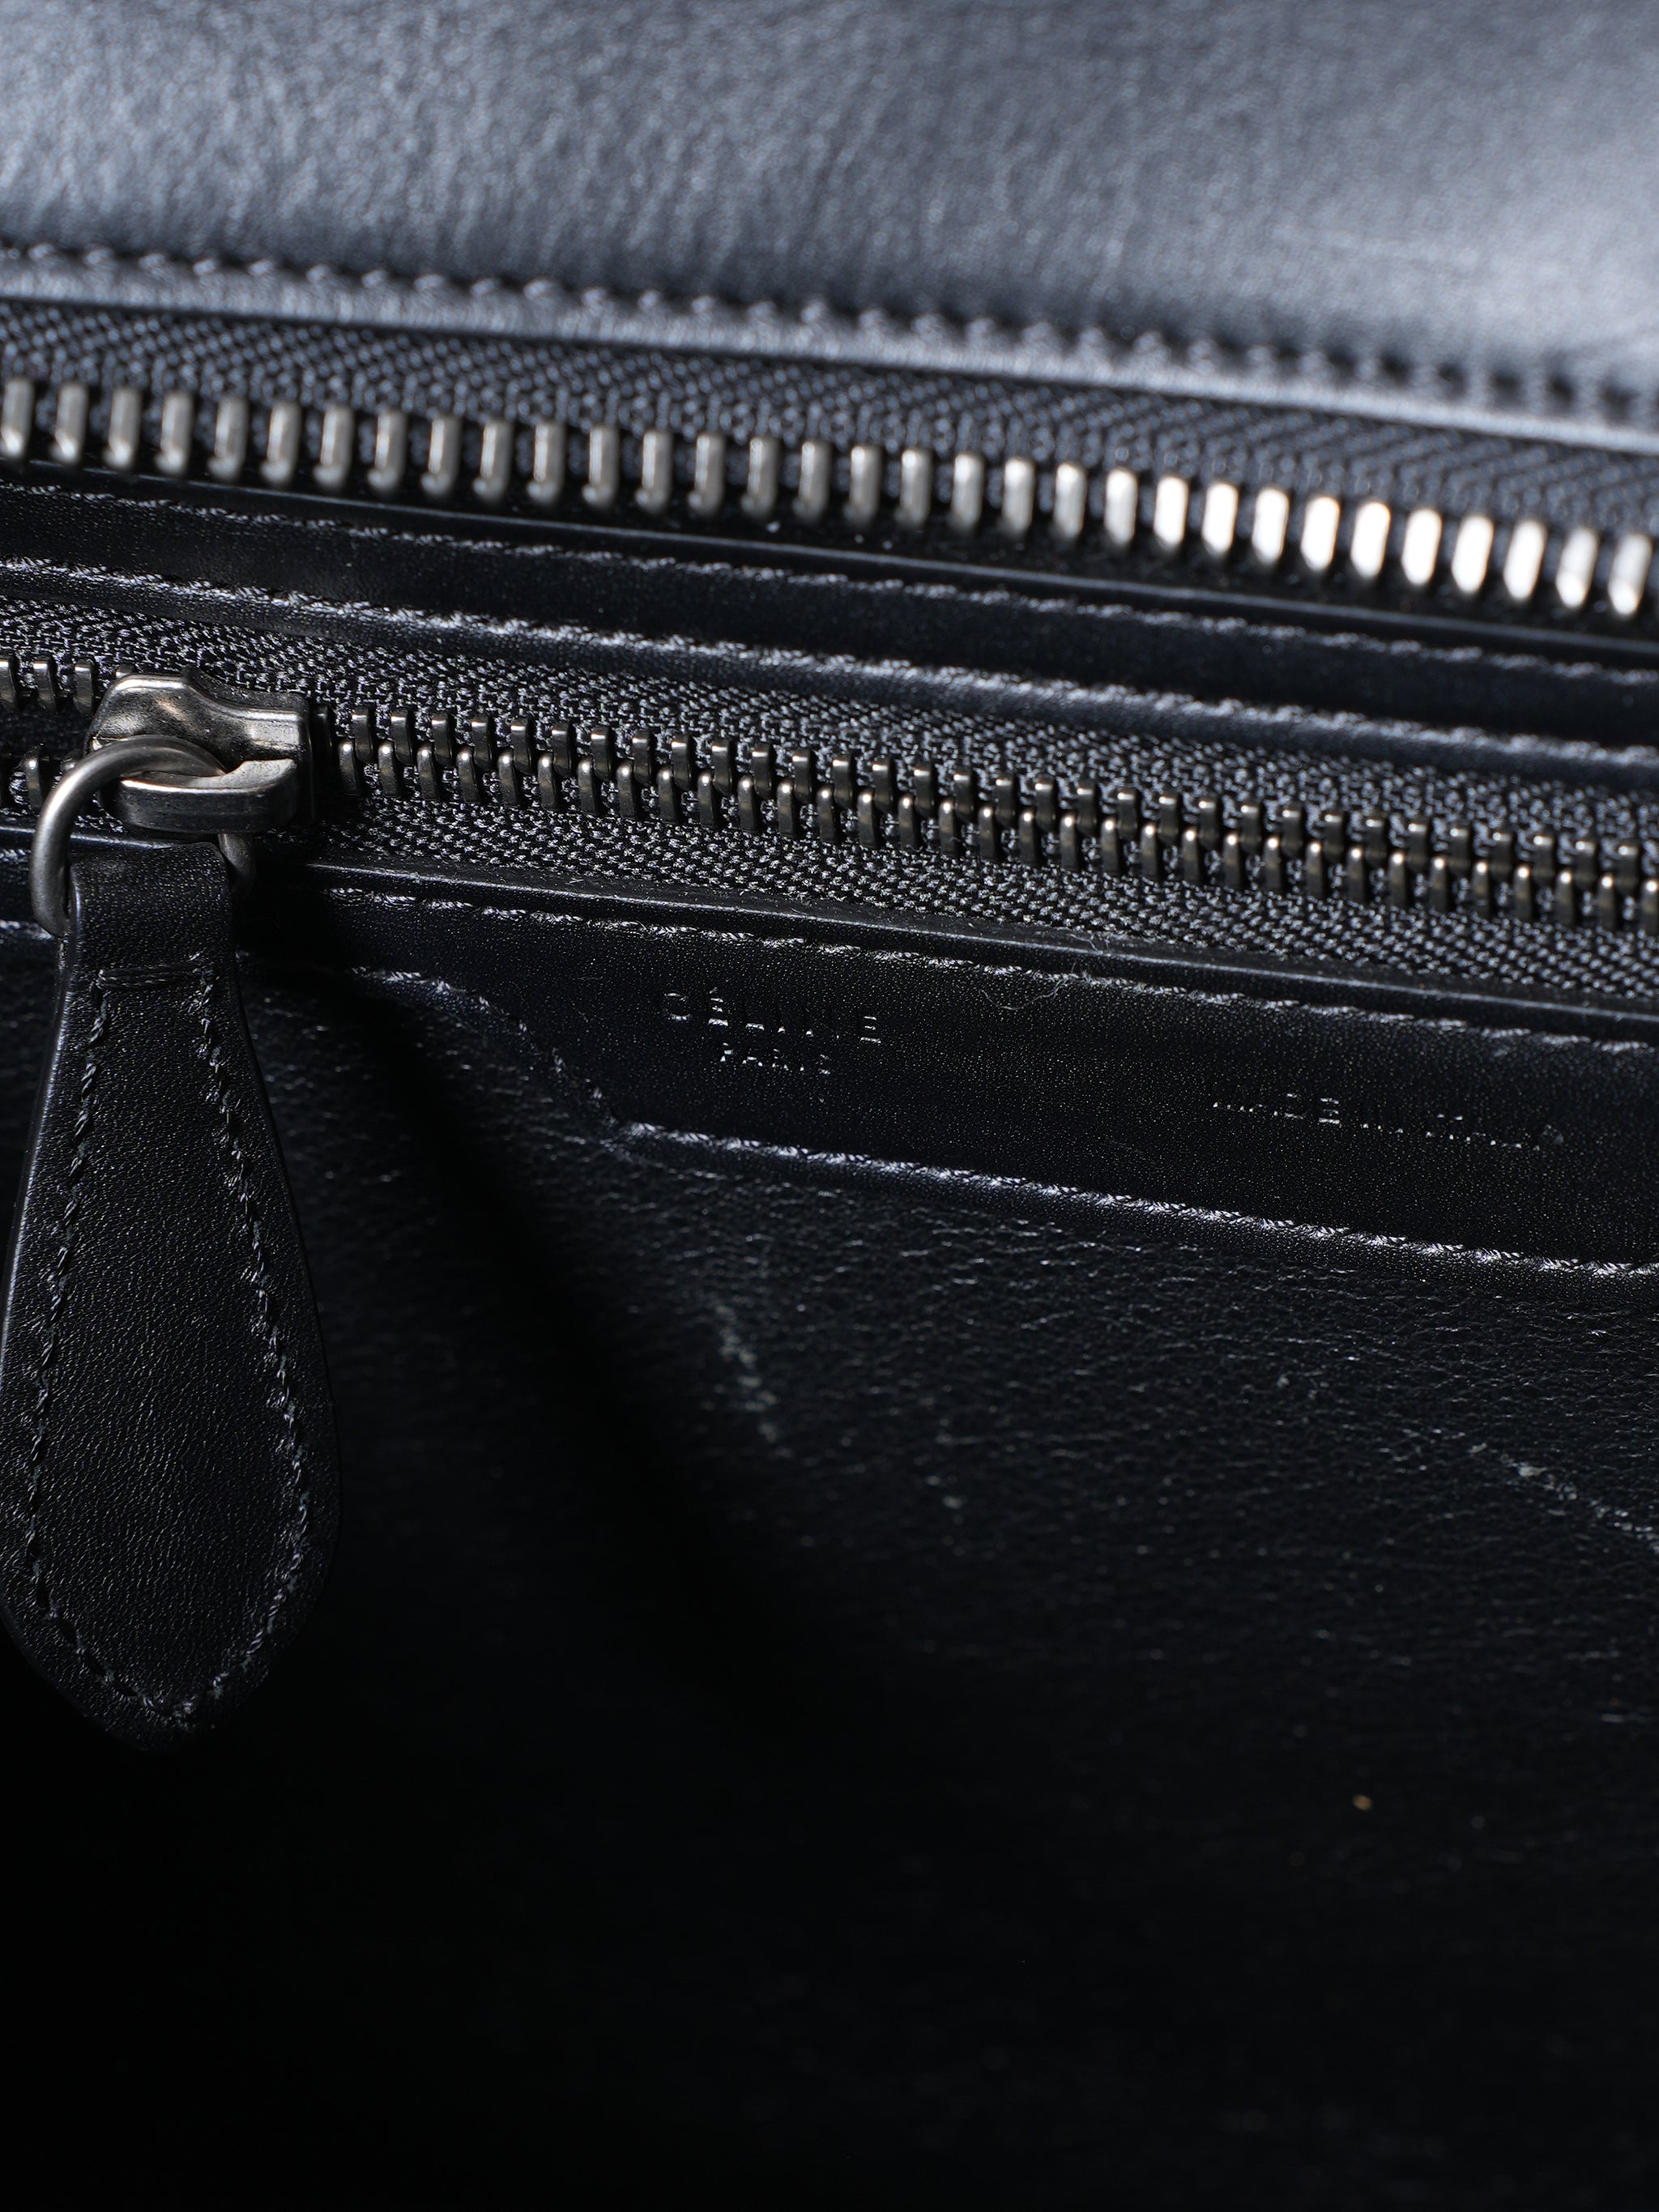 Céline Luggage Mini - nitrolicious.com | Bags, Celine tote bag, Bag  accessories